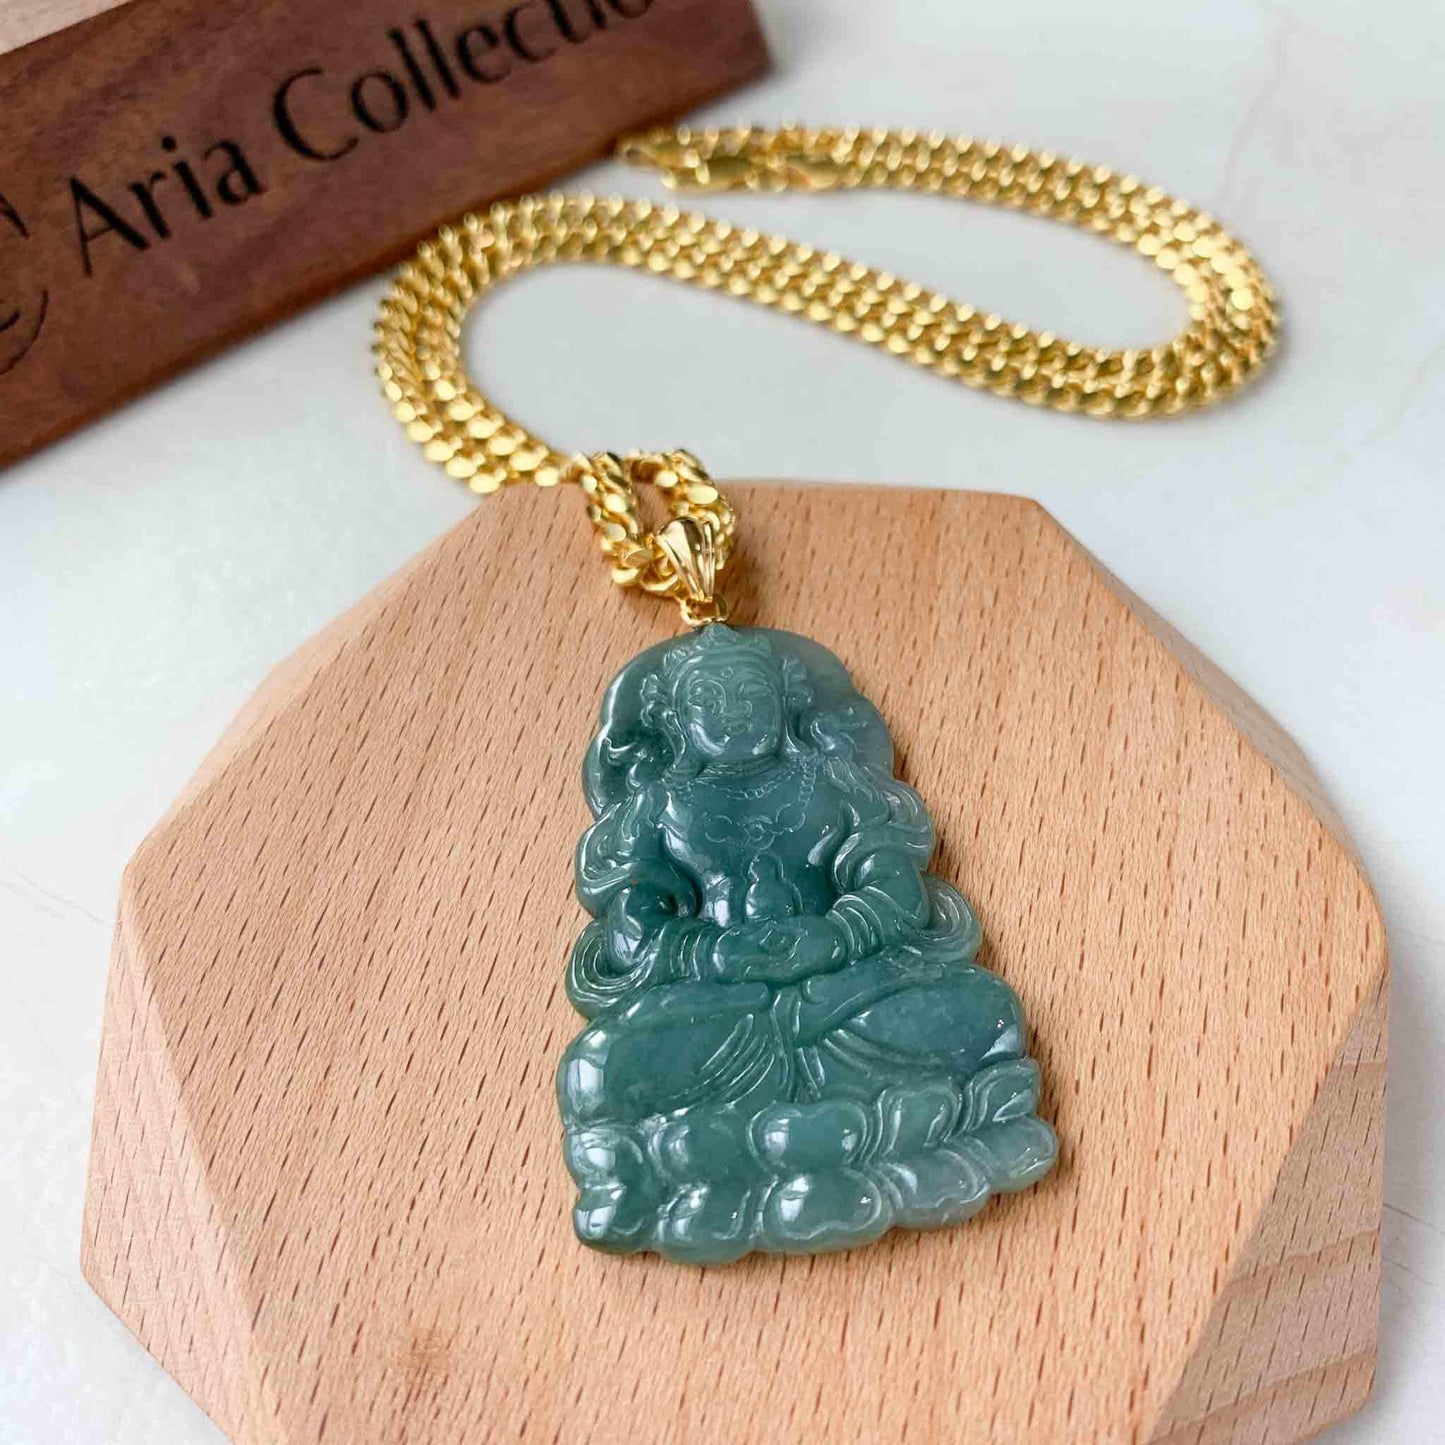 Jadeite Jade Guan Yin Avalokiteshvara Hand Carved Pendant with 18K Solid Gold Bail, Guanyin, 观音, AMF-0223-1689654687